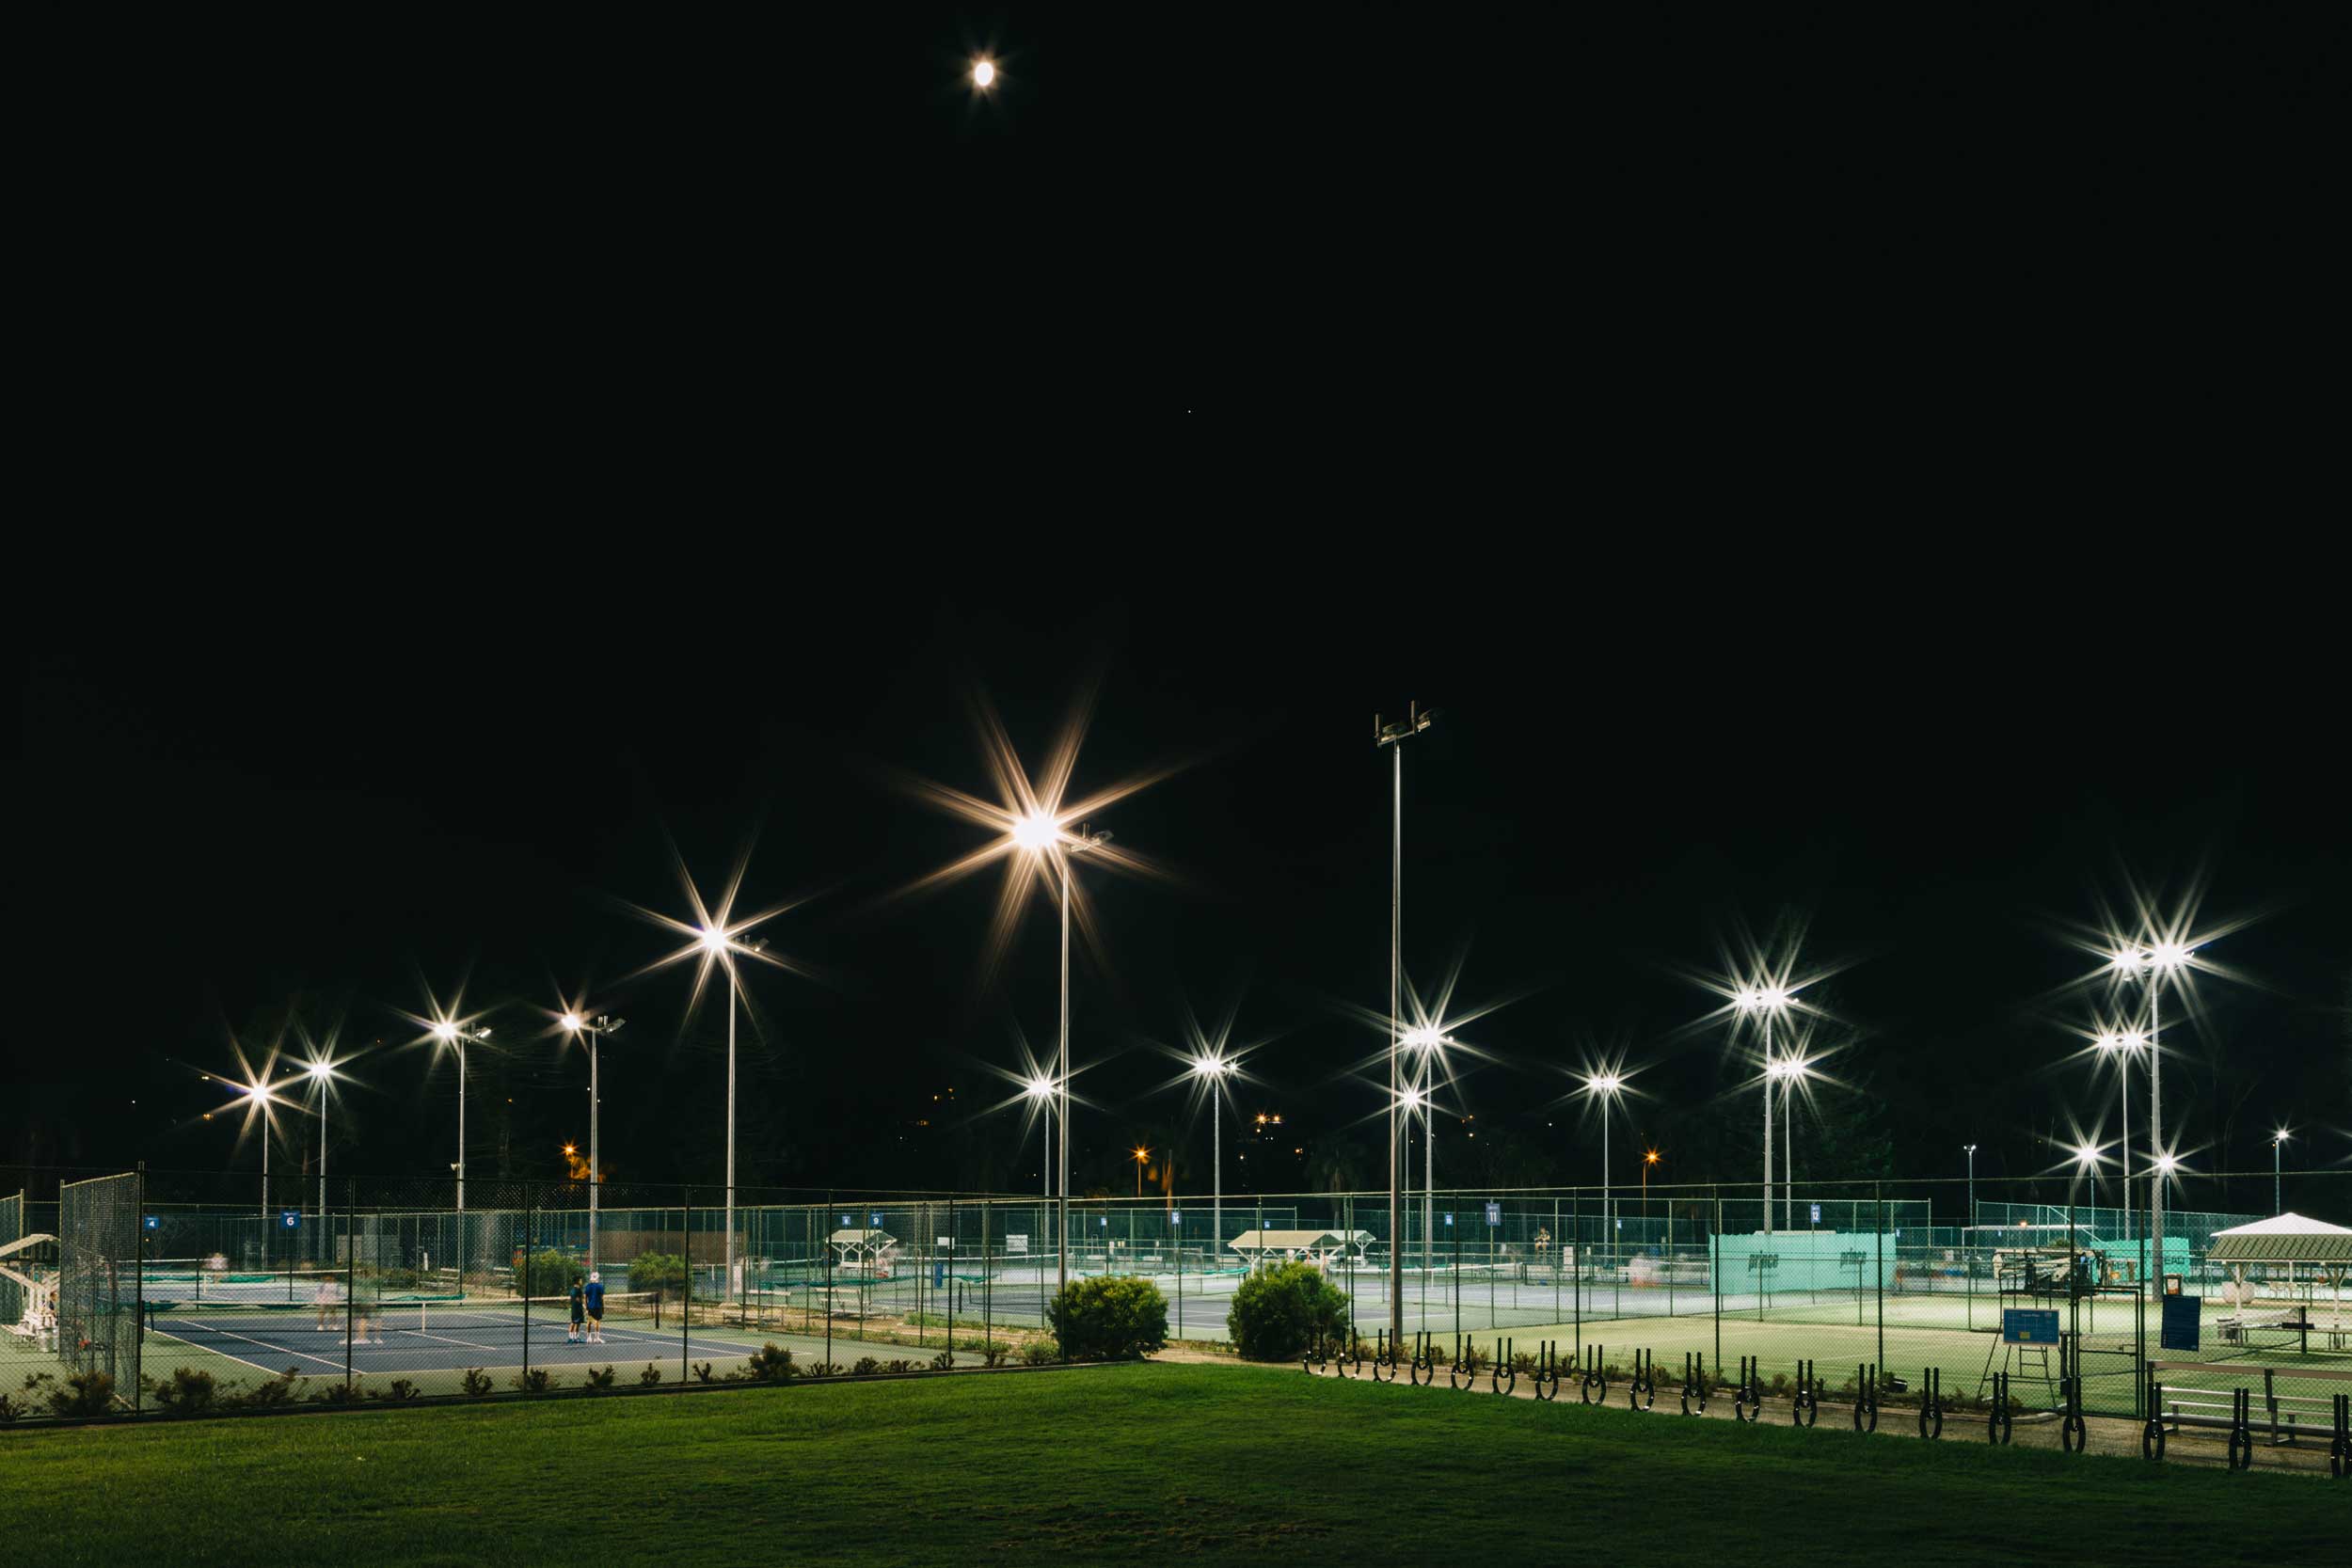 University Of Queensland Tennis LED lights